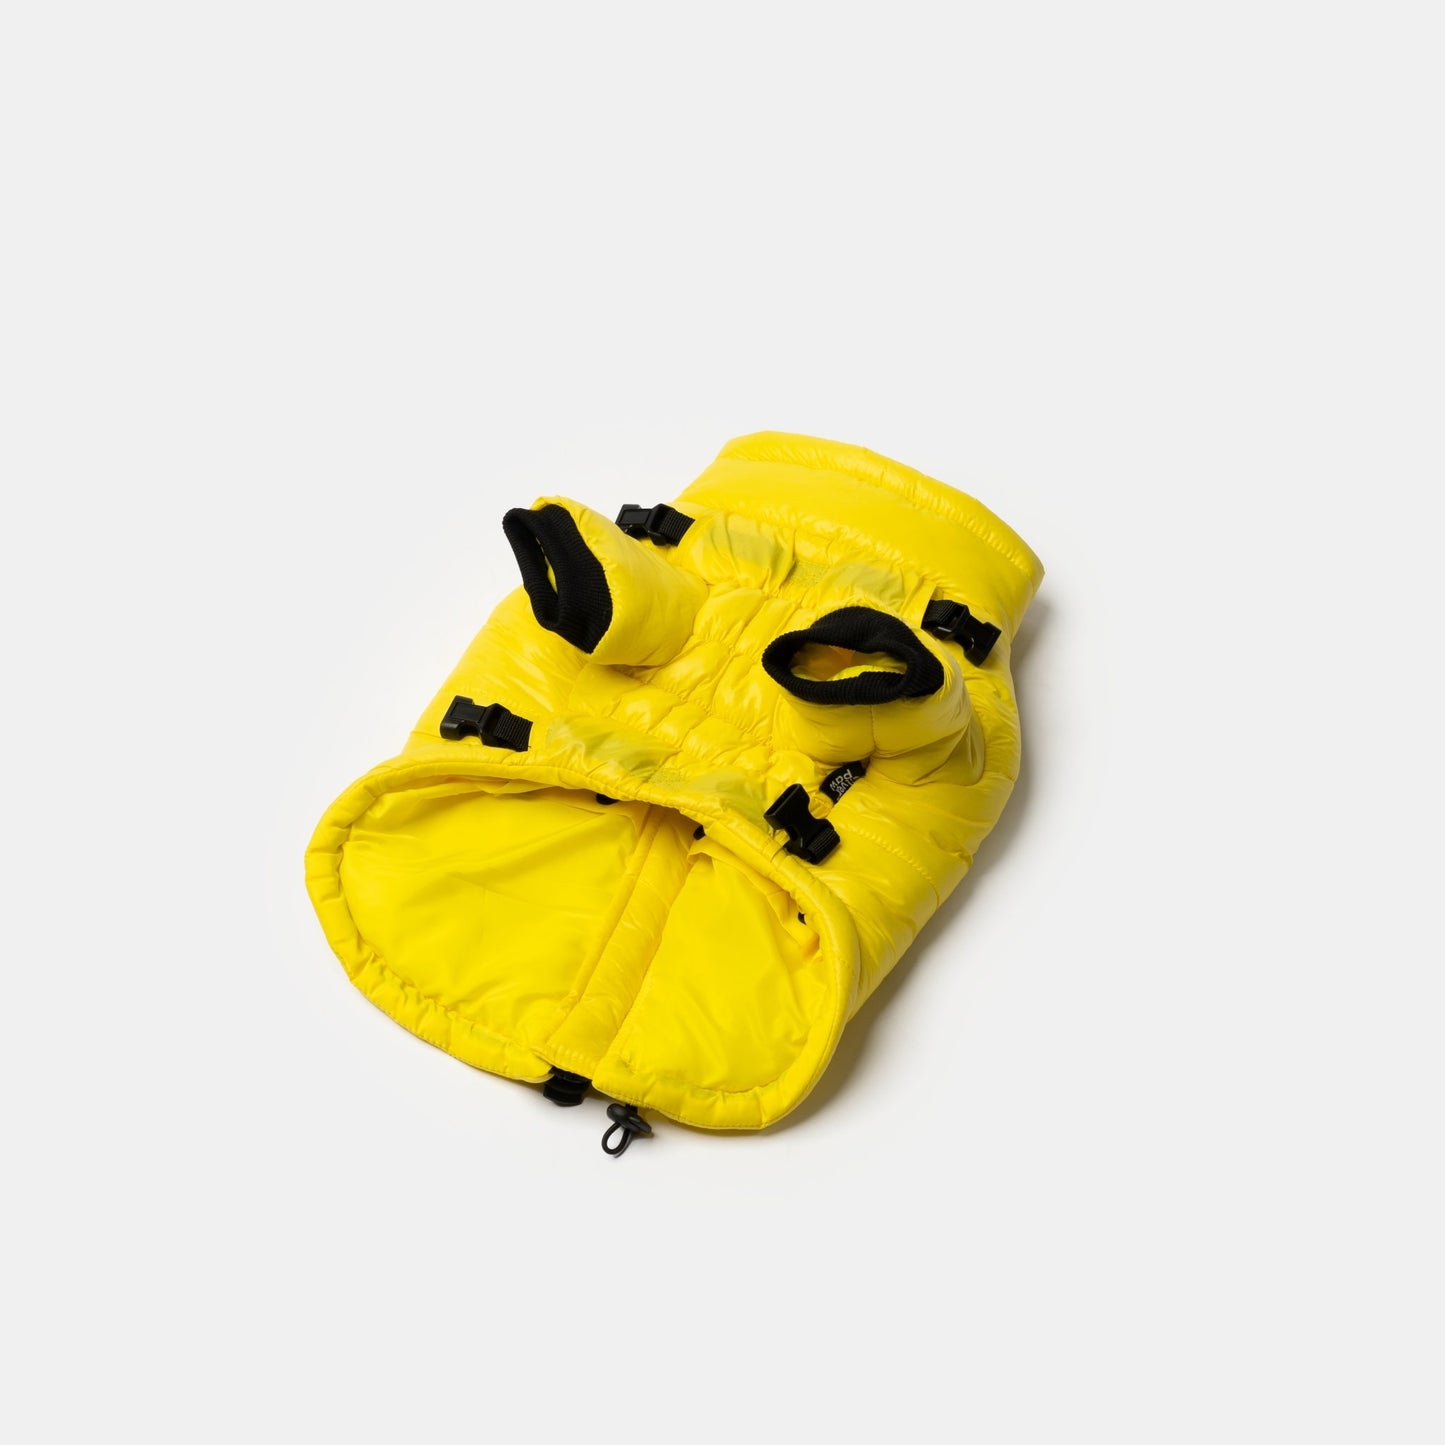 Whistler Full Body Dog Snowsuit - Yellow